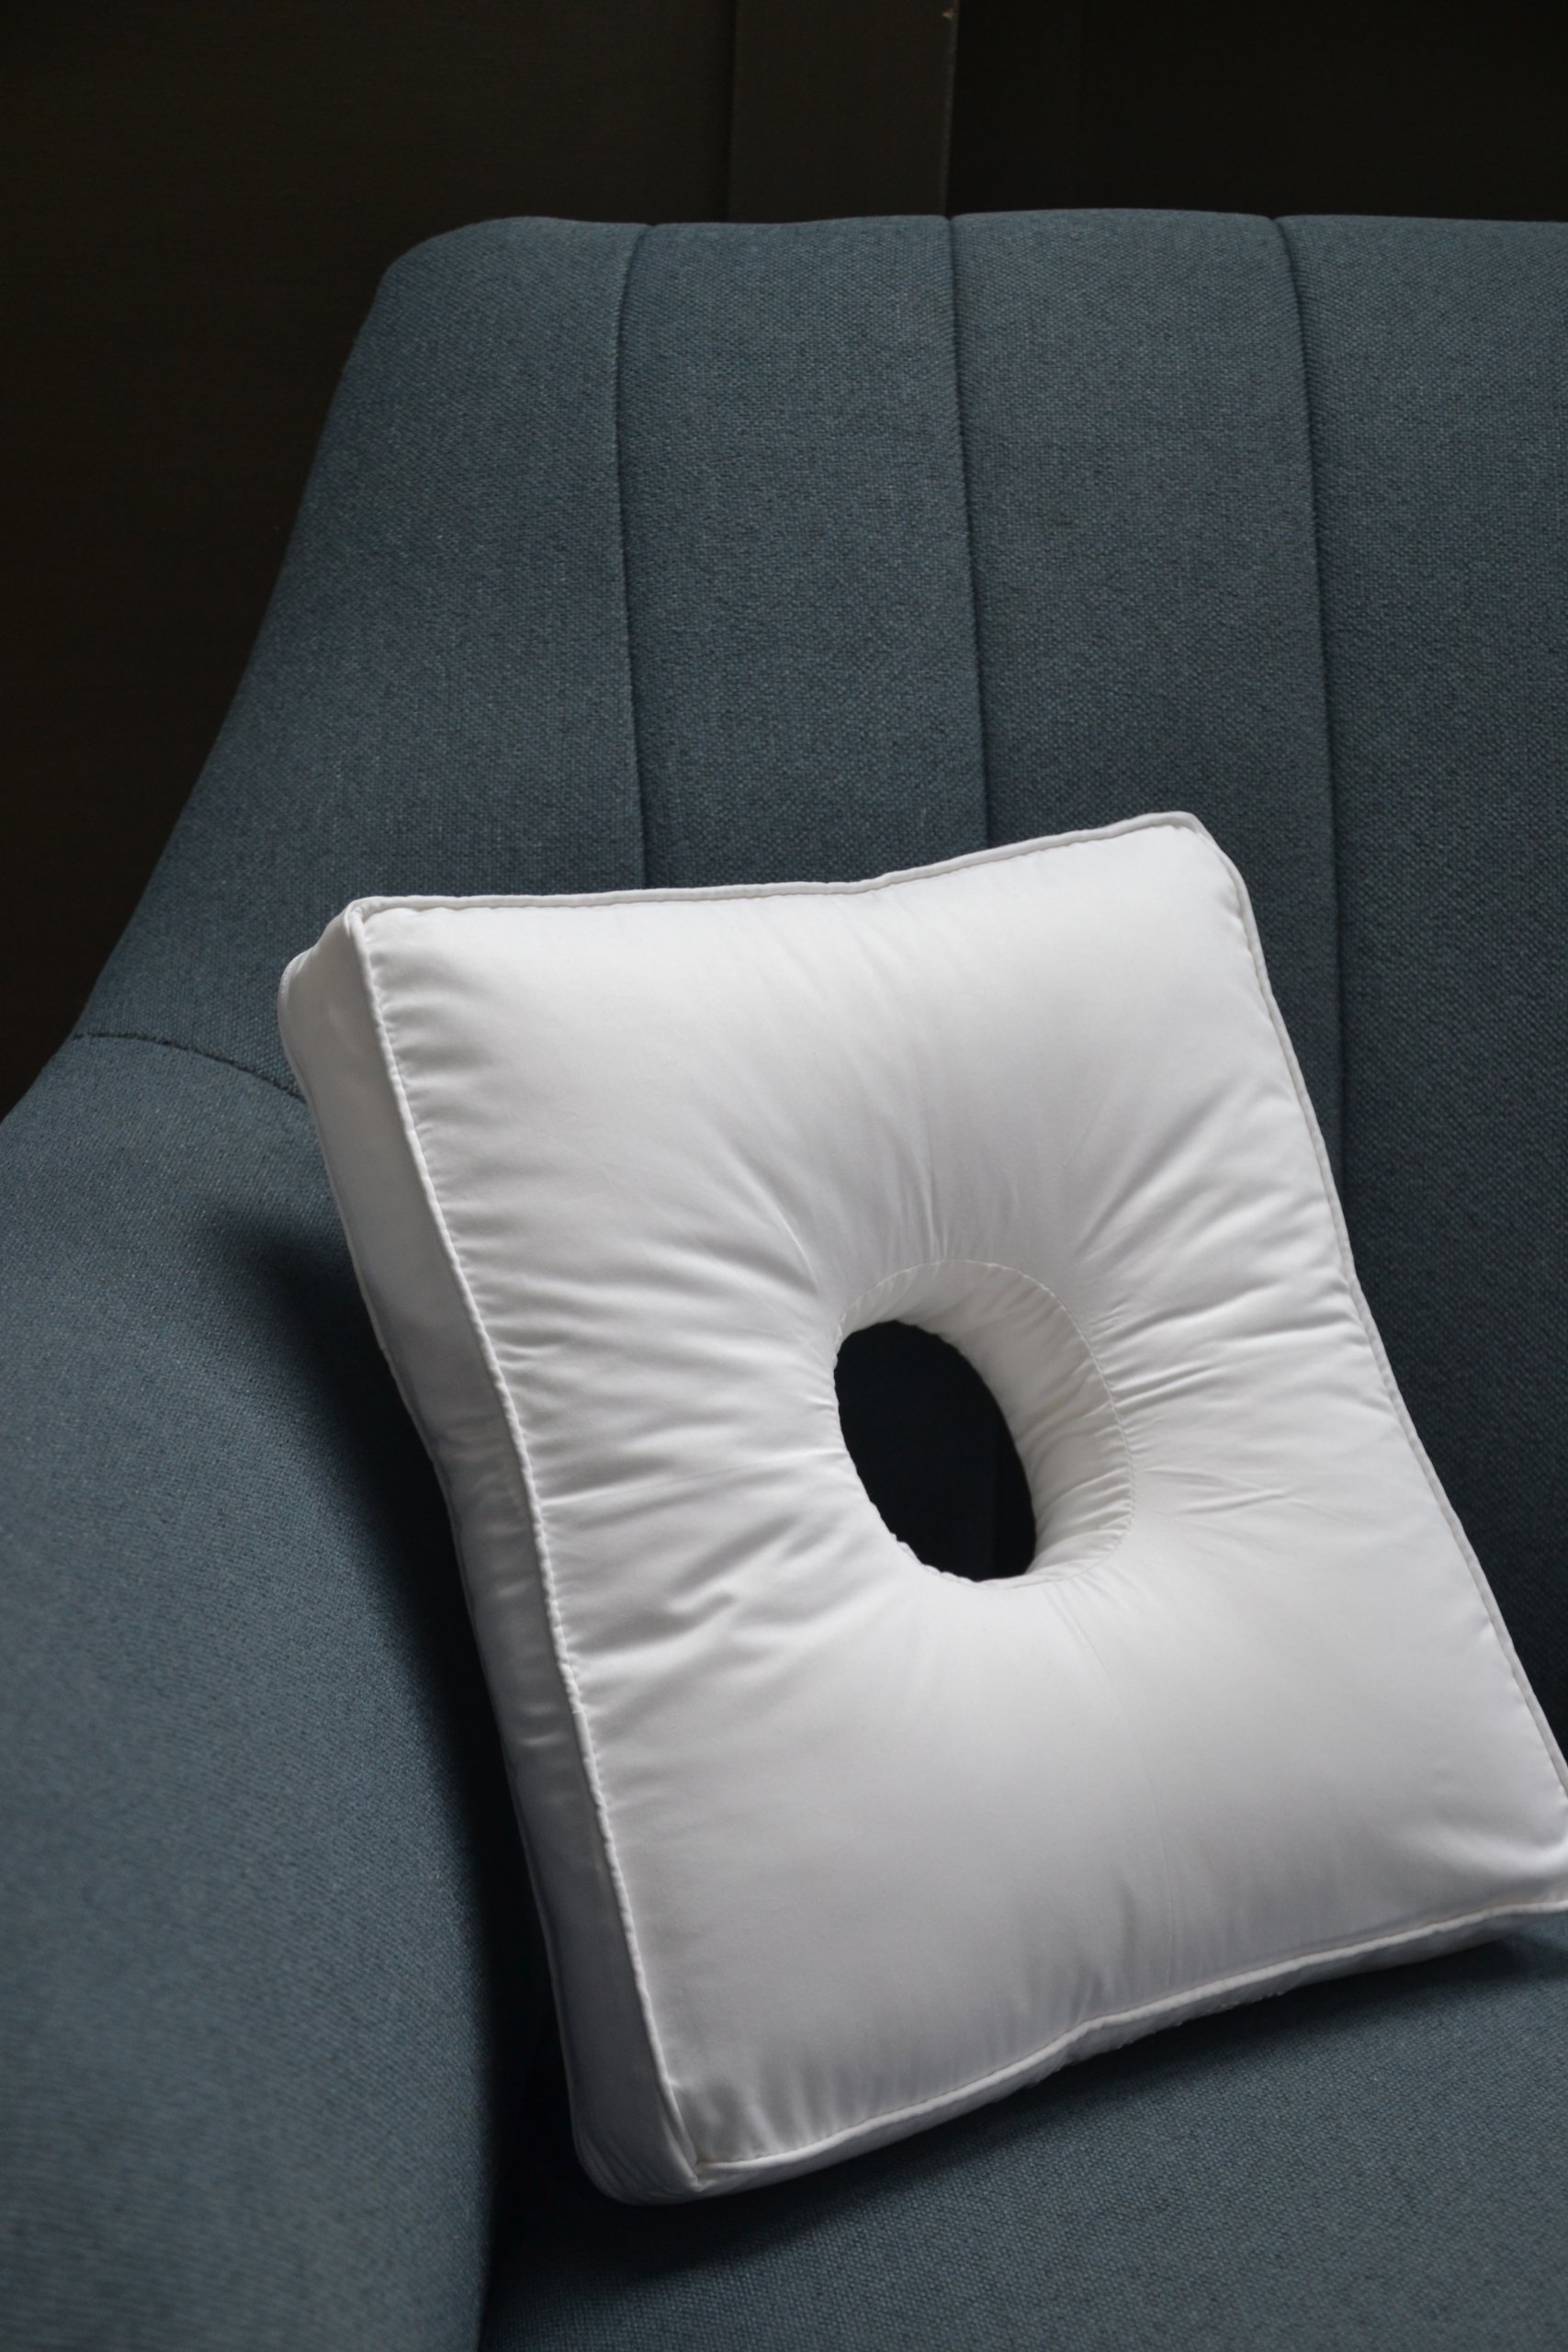 Mono Pillow on chair